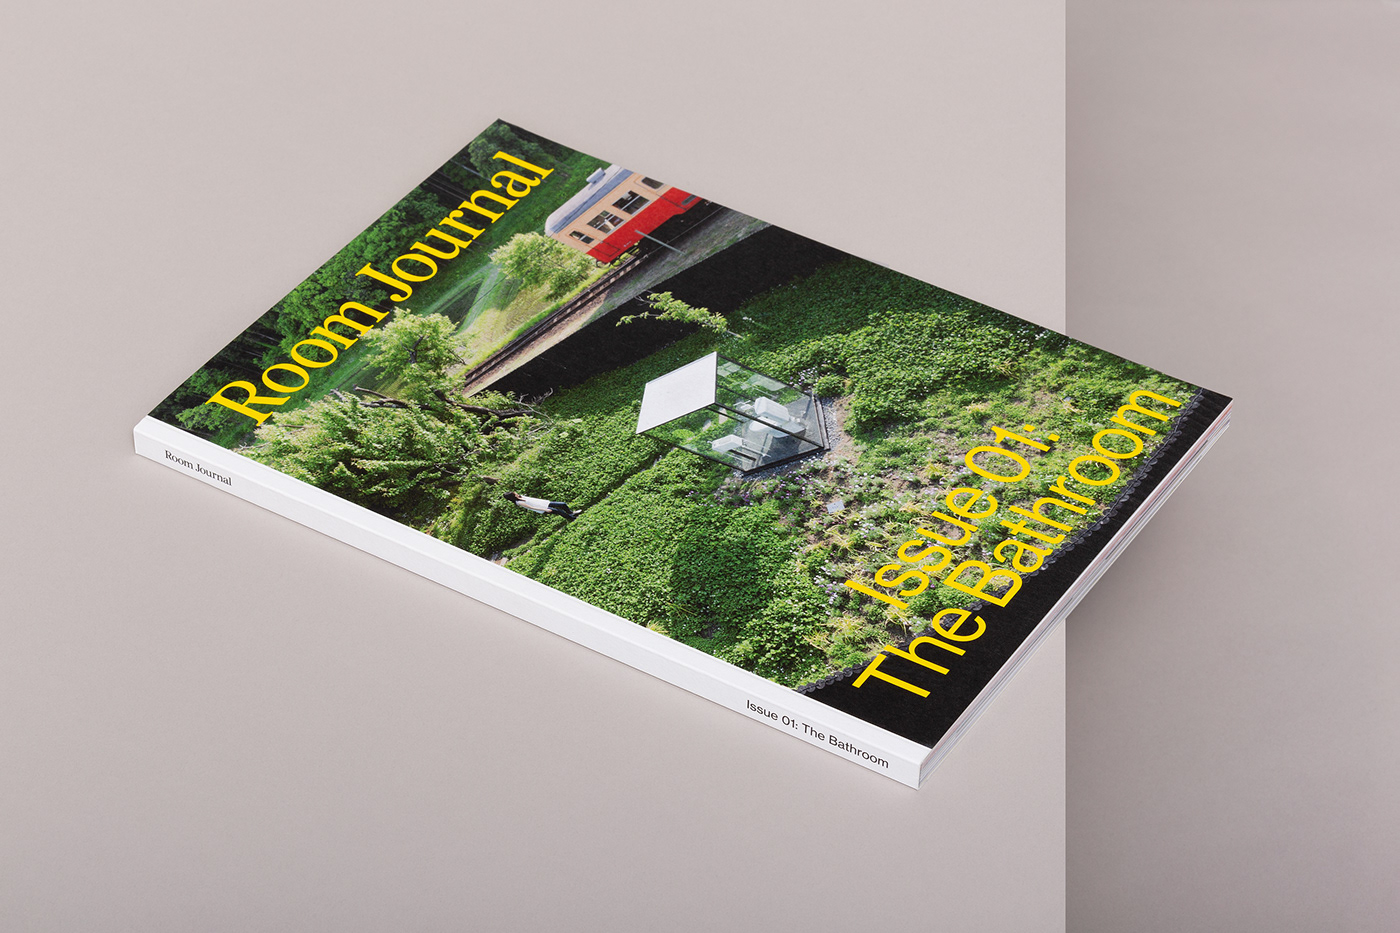 magazine print editorial design architecture bathroom